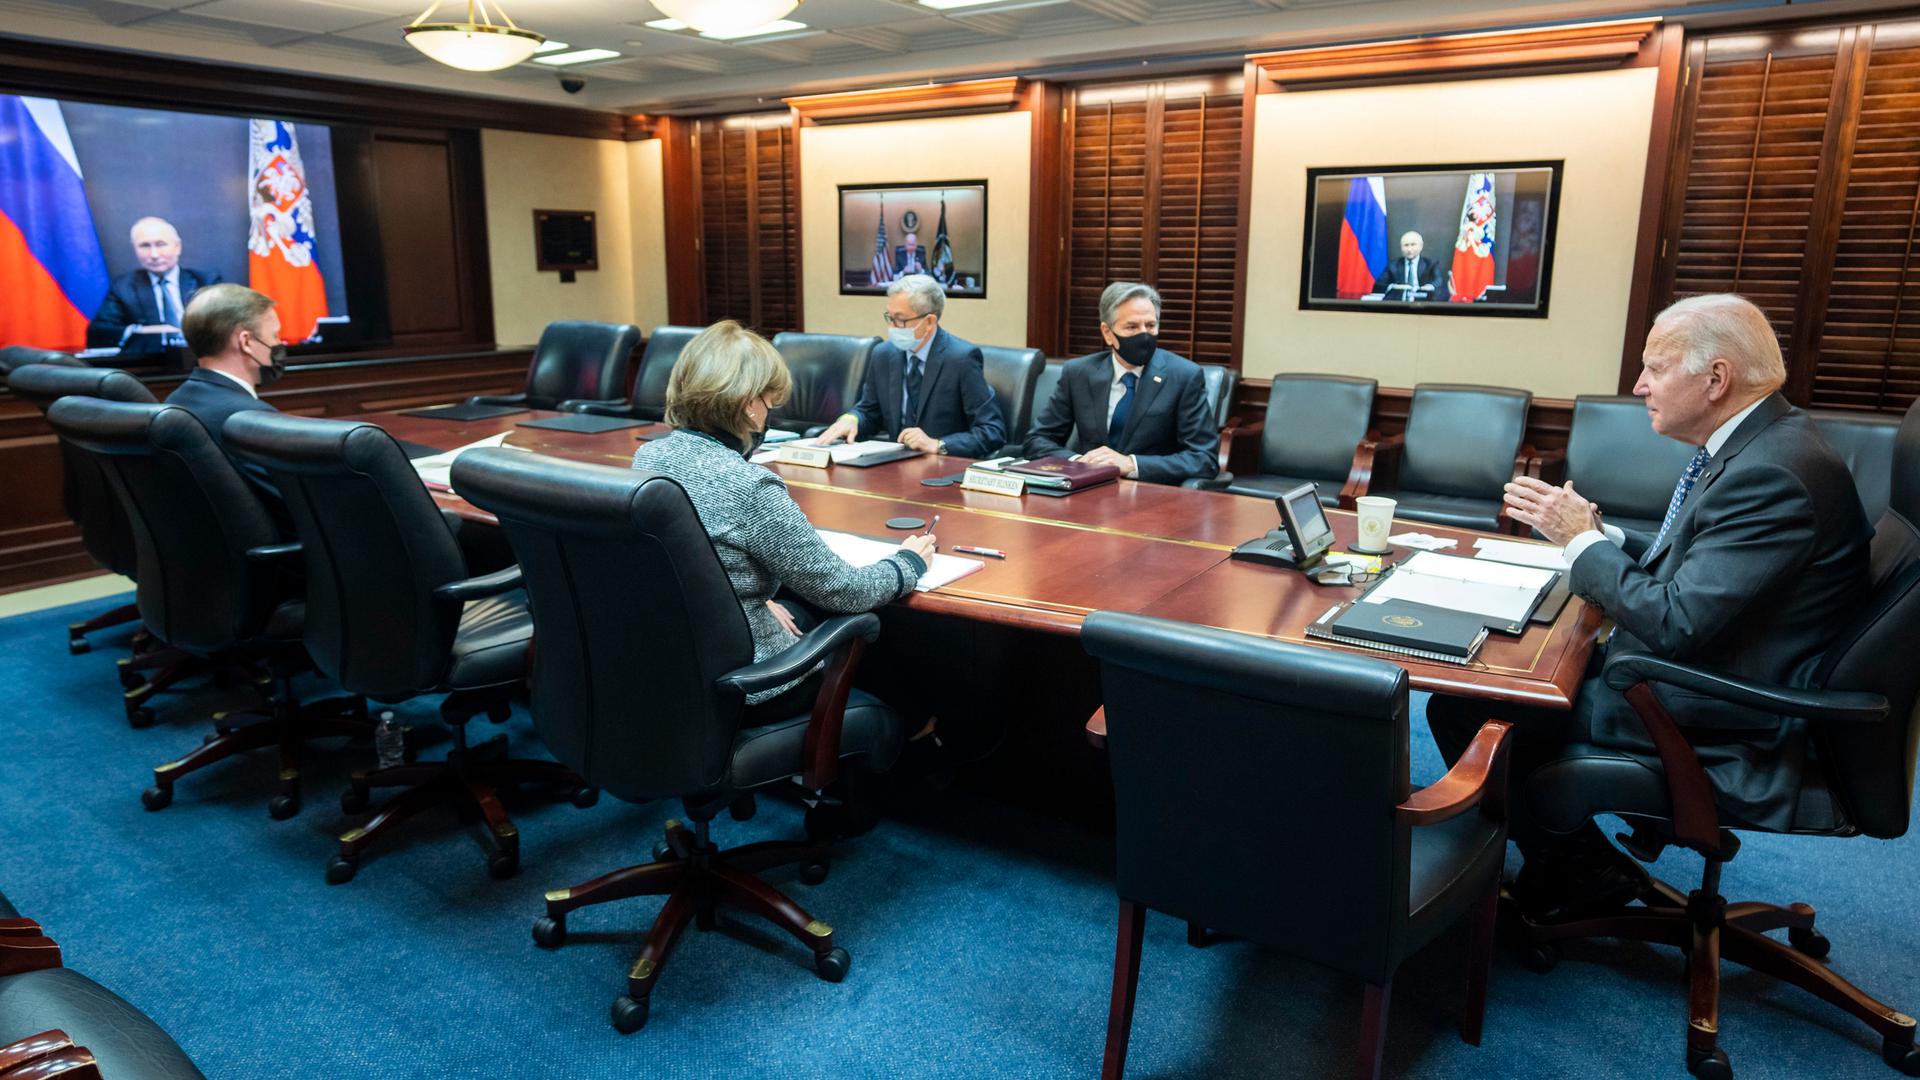 Presidents Joe Biden and Vladimir Putin during a video meeting on Tuesday